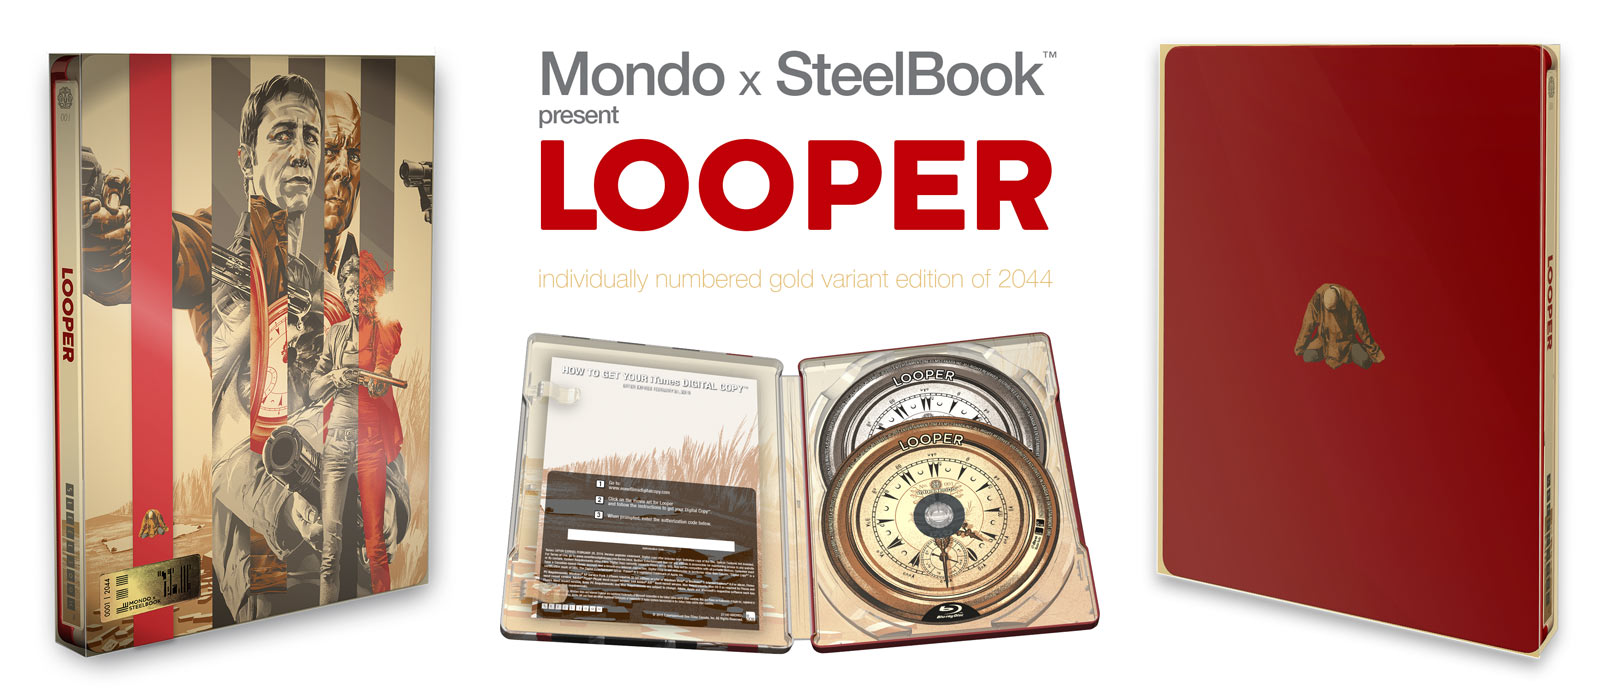 looper-mondo-x-steelbook-variant